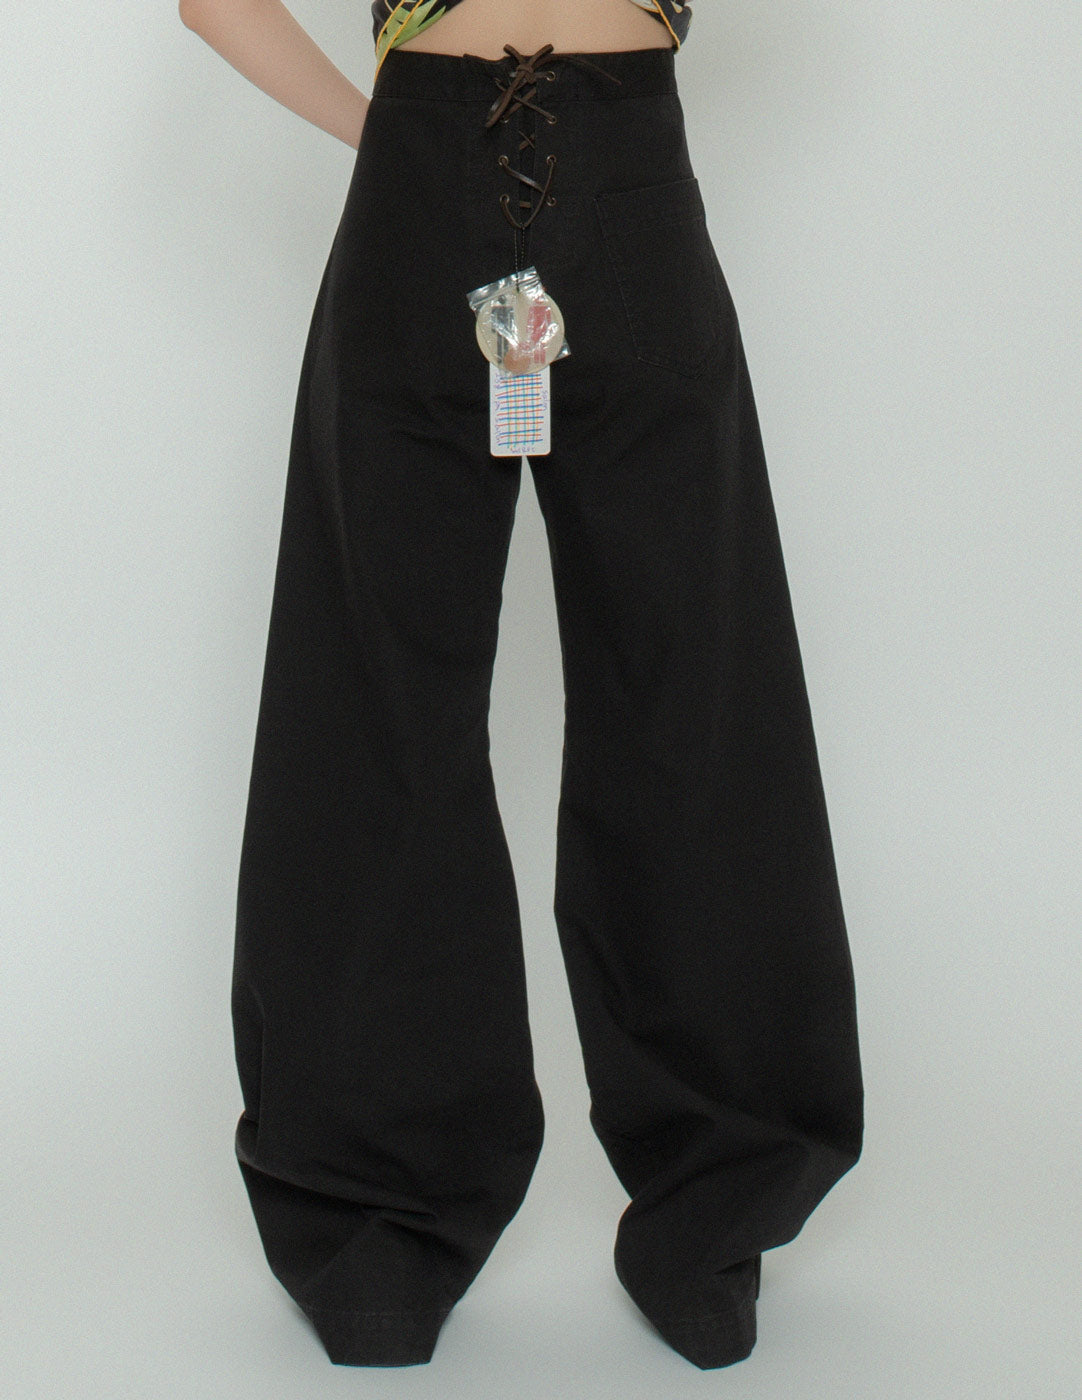 MAKIA Logo Men's Casual Khaki Tapered Nautical Trousers Pants Bottoms NWT -  M Couture